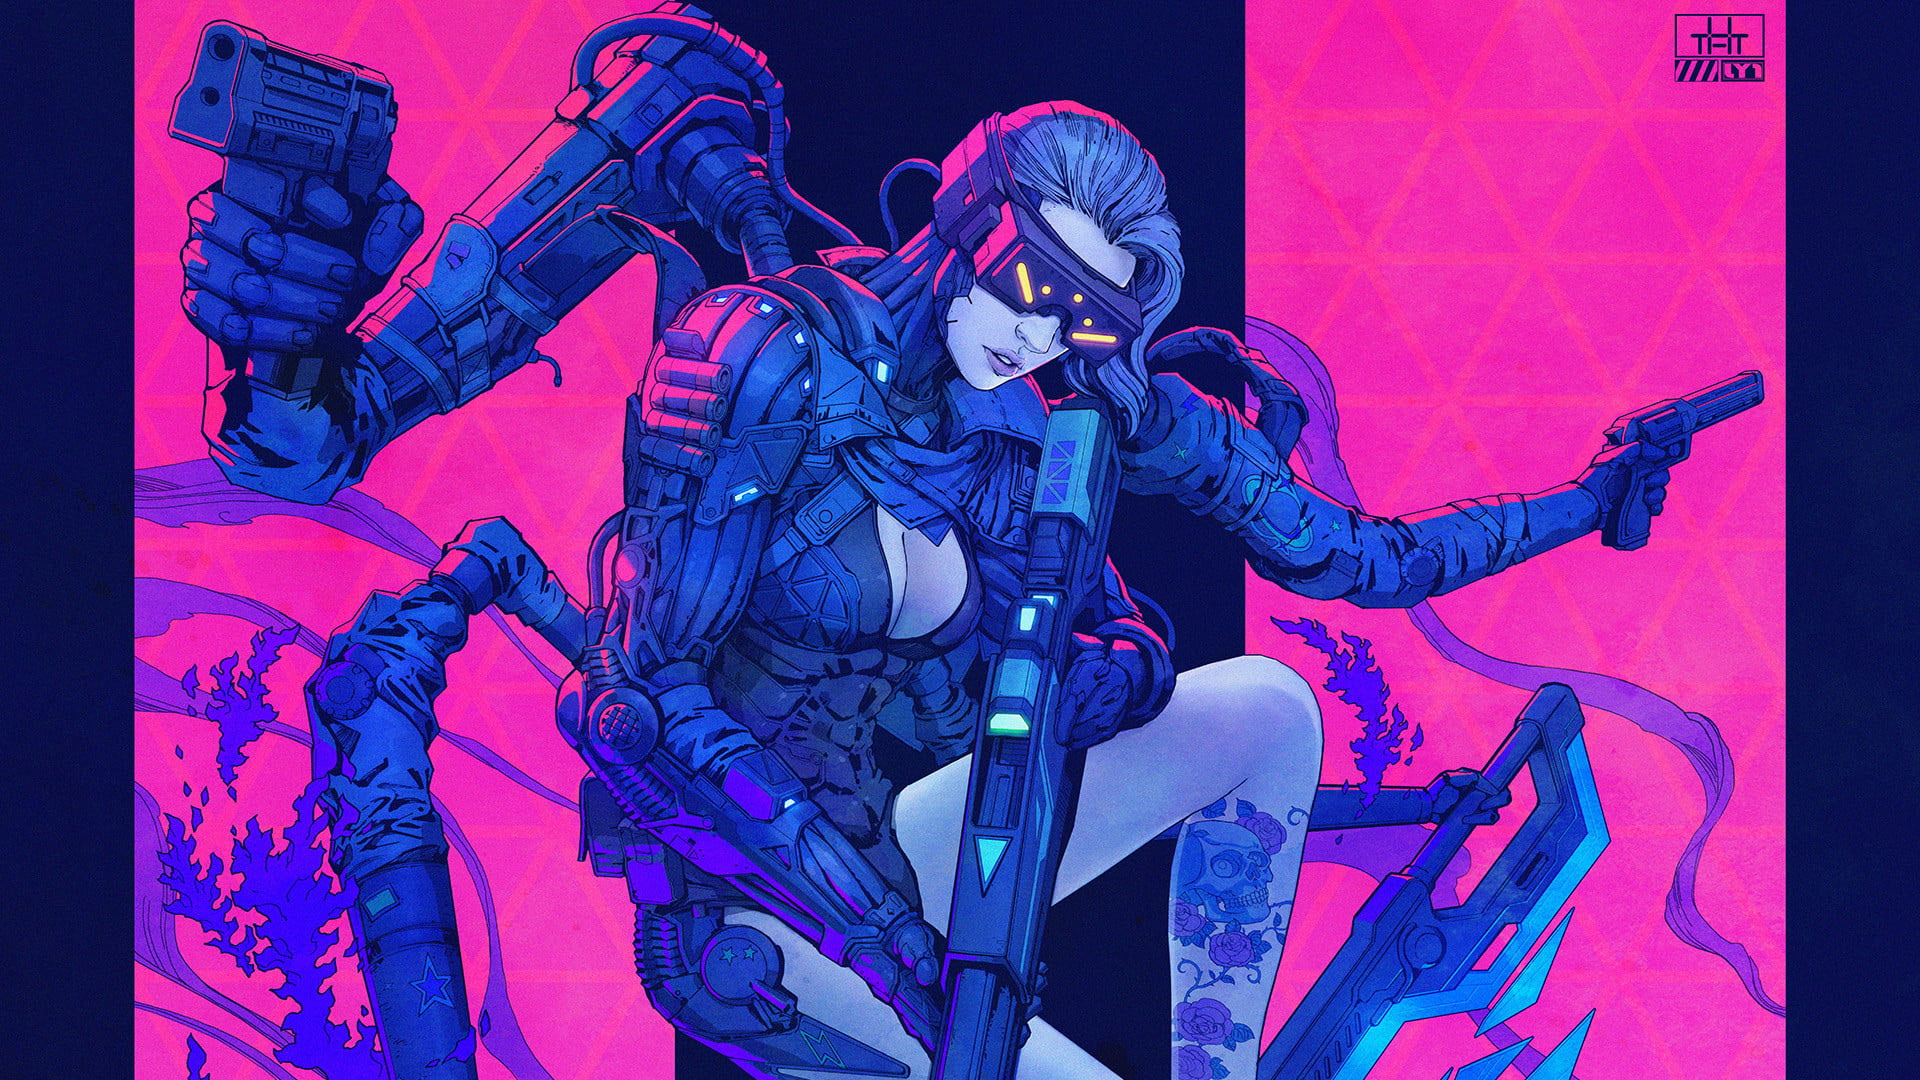 Wallpaper Humanoid Soldier Vector Art, Cyberpunk, Science